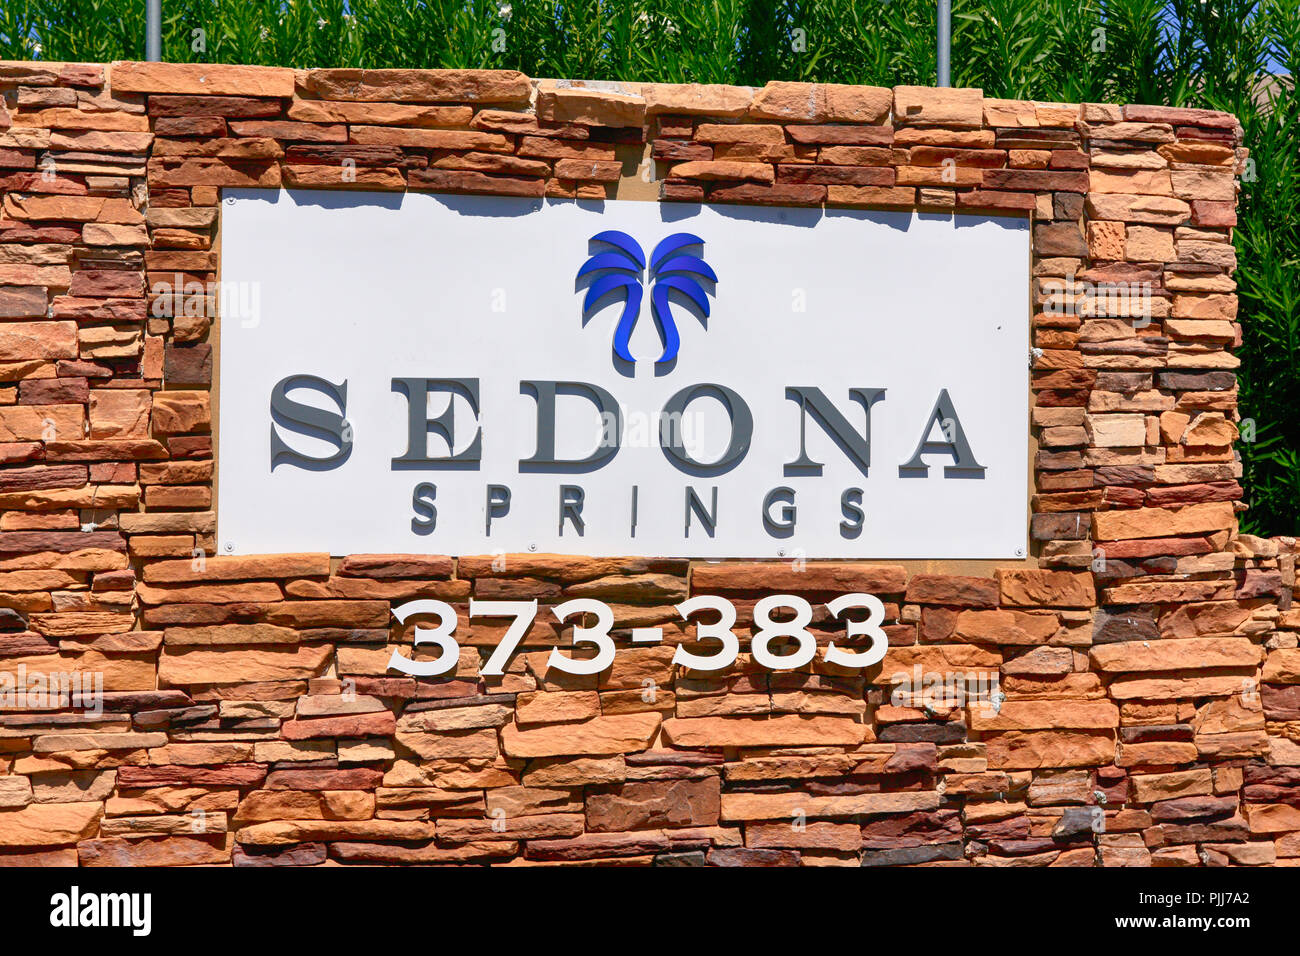 Sedona Springs gated community housing entrance sign in Tucson, AZ Stock Photo